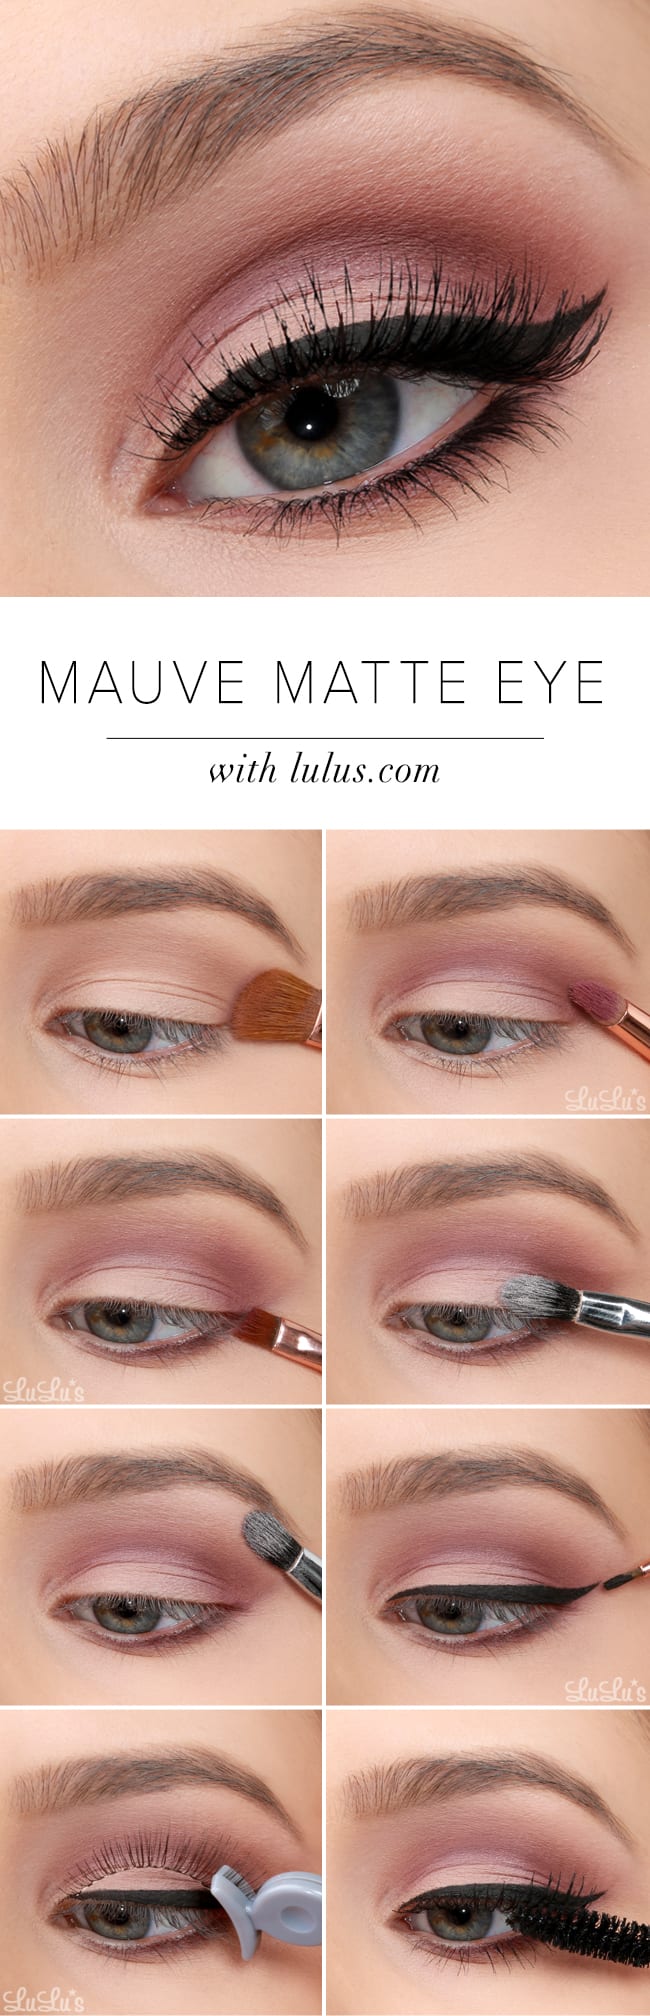 Lulus How-To: Mauve Matte Eye Tutorial - Lulus.com Fashion Blog